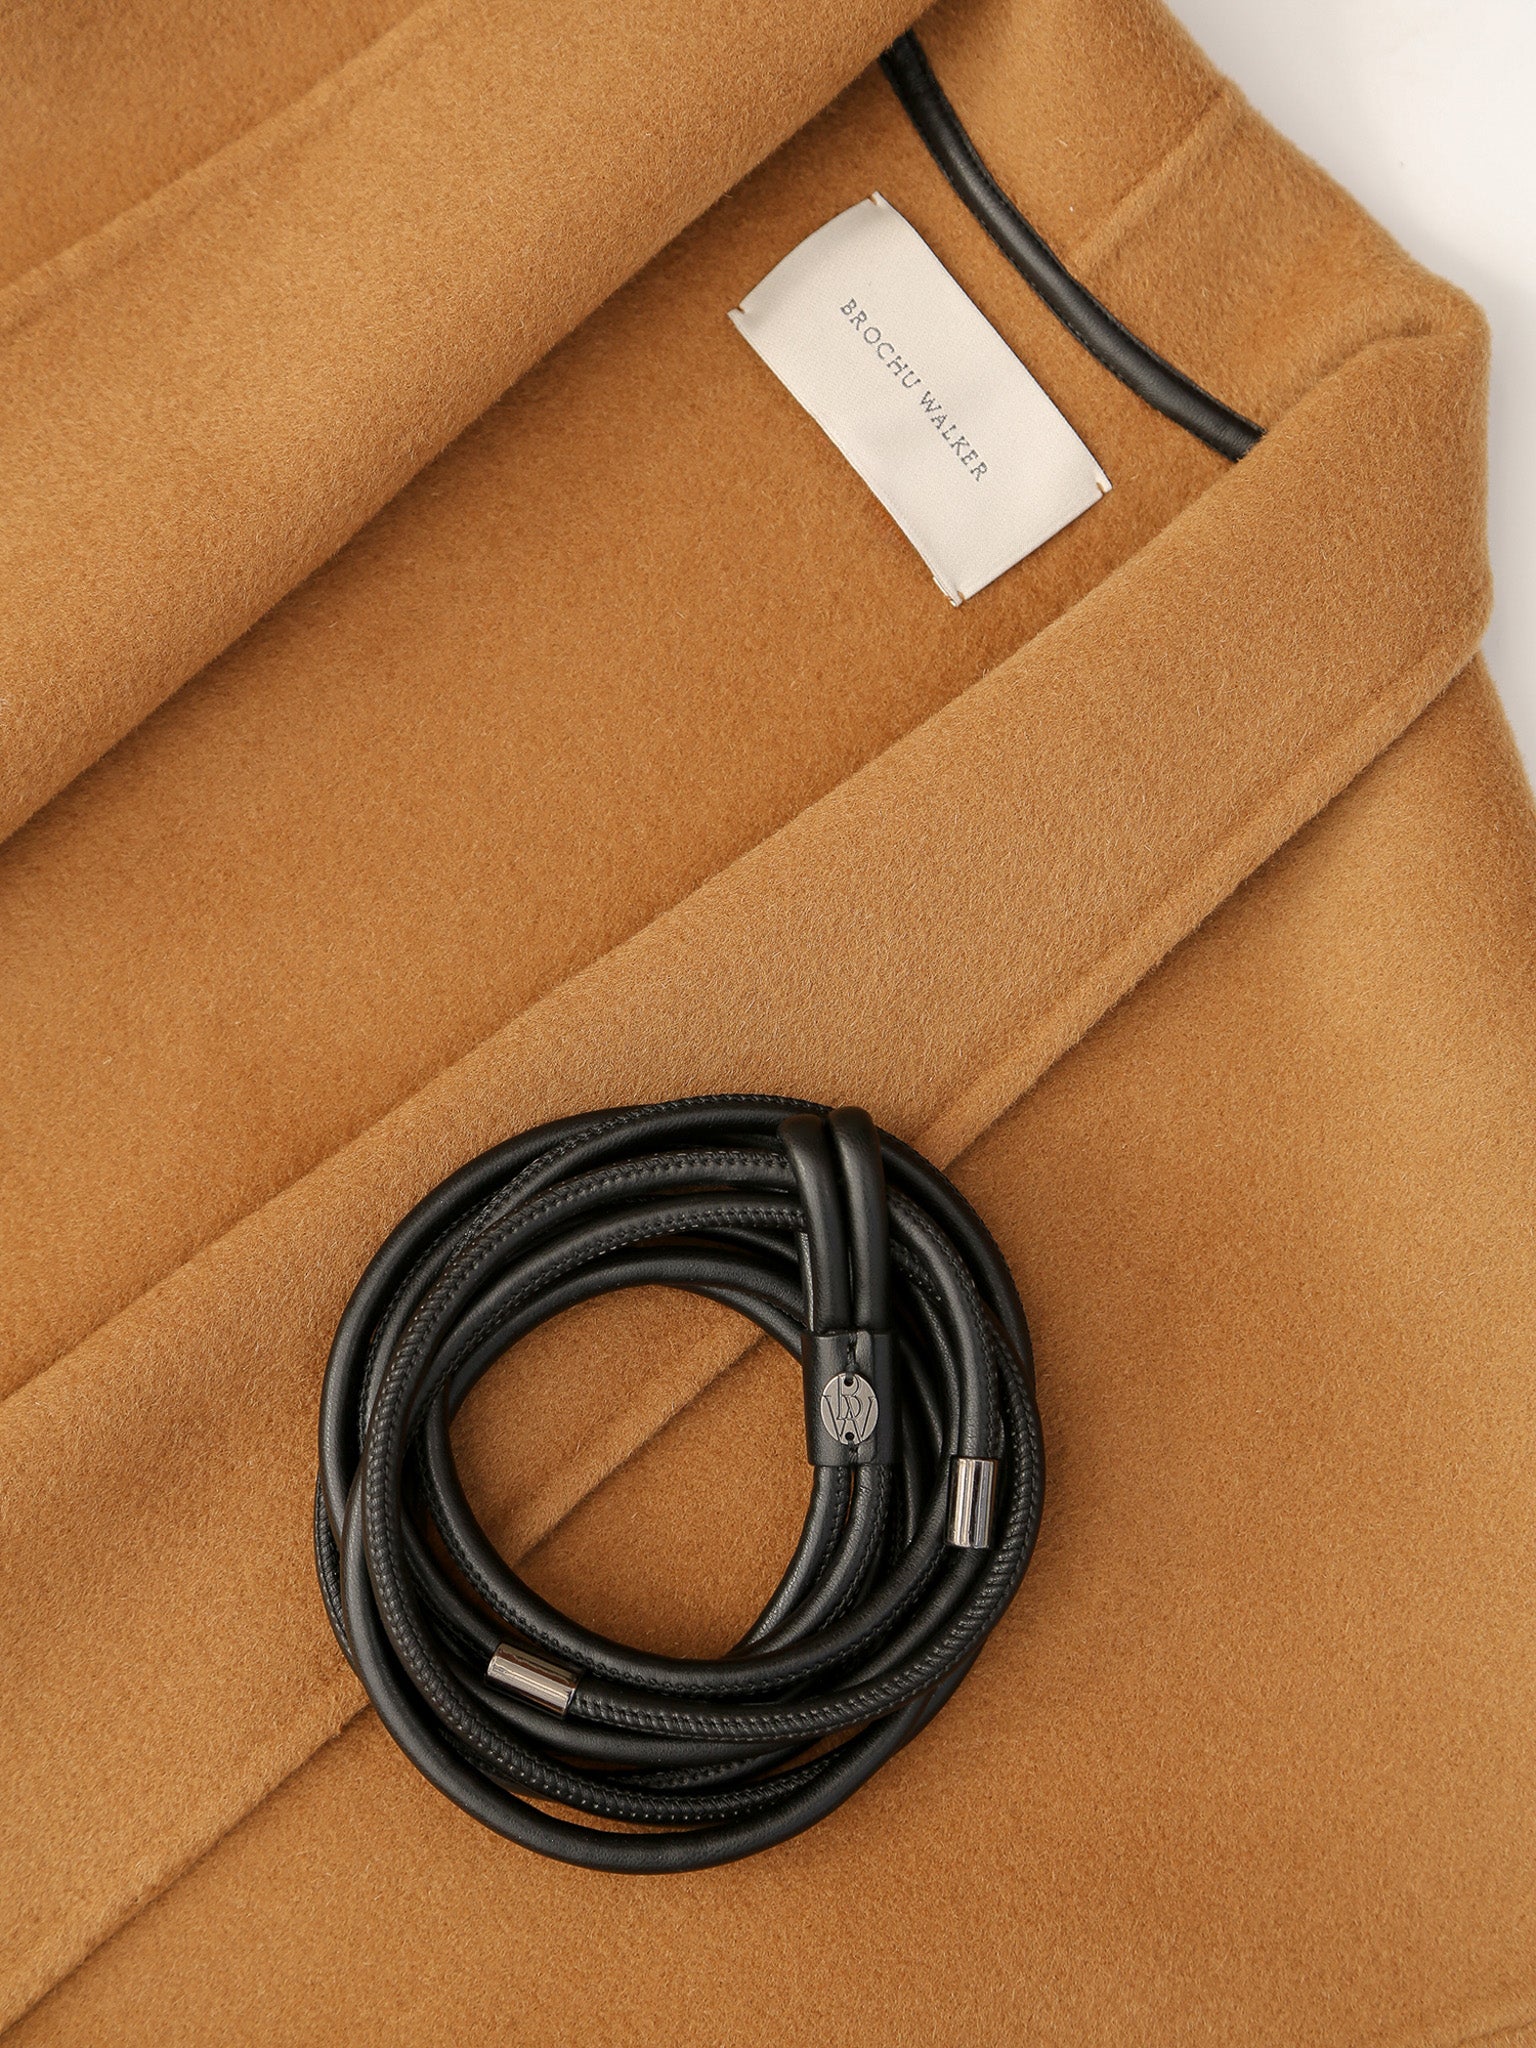 Wolsey wool tan wrap coat and belt close up